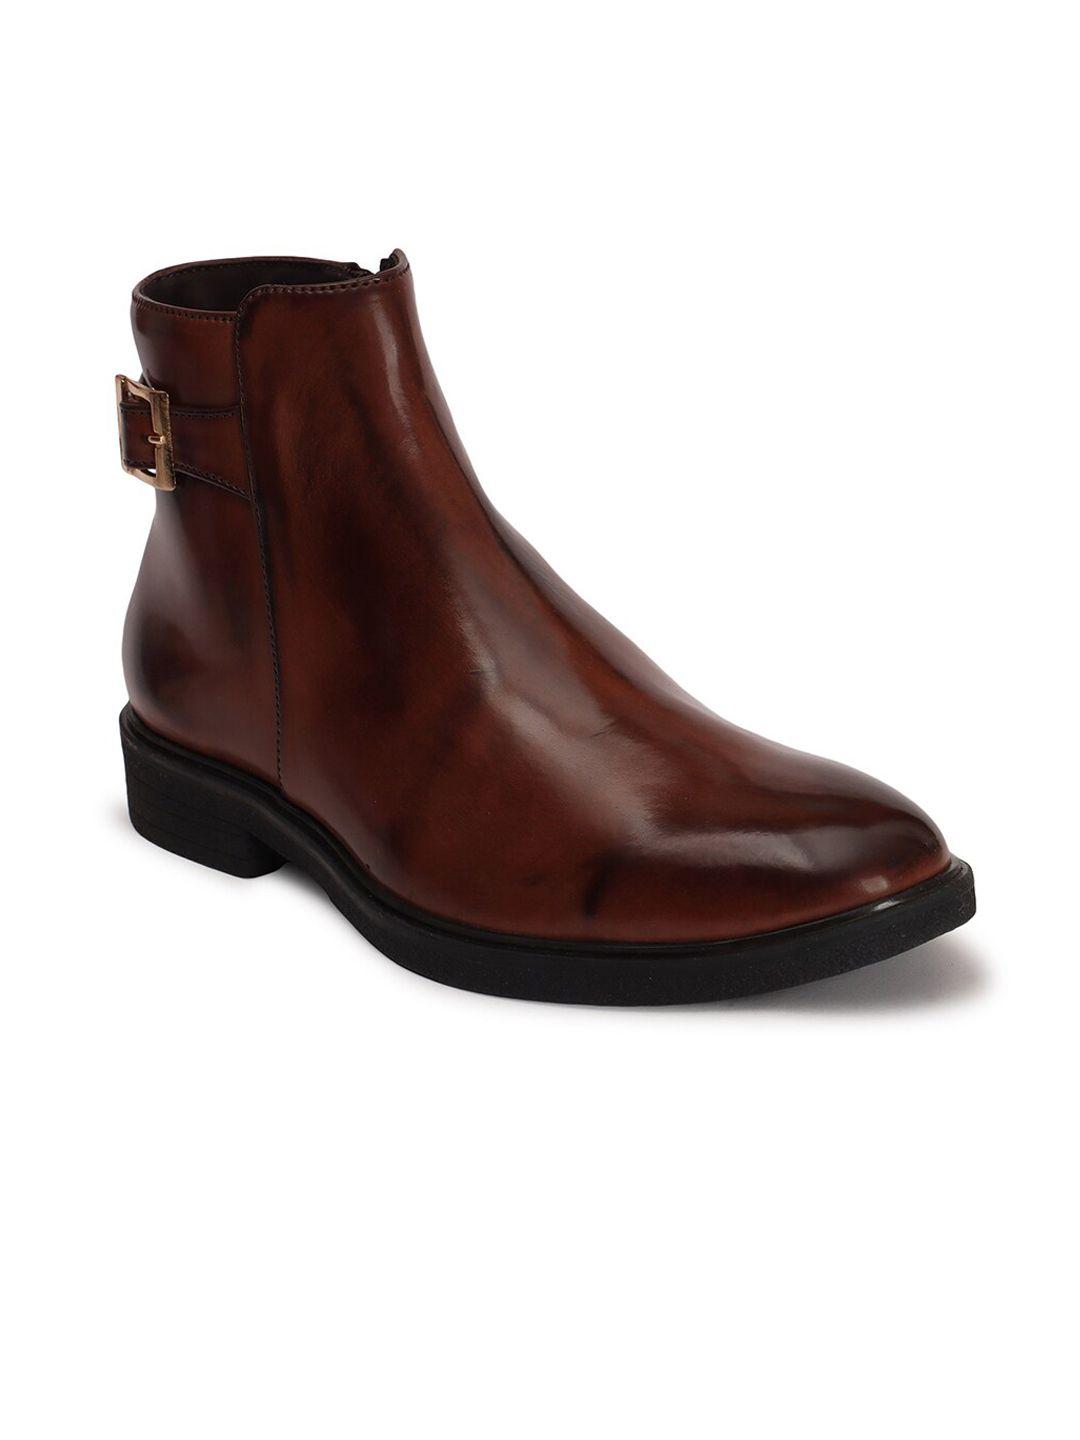 carlton london men mid top block heel boots with buckle detail